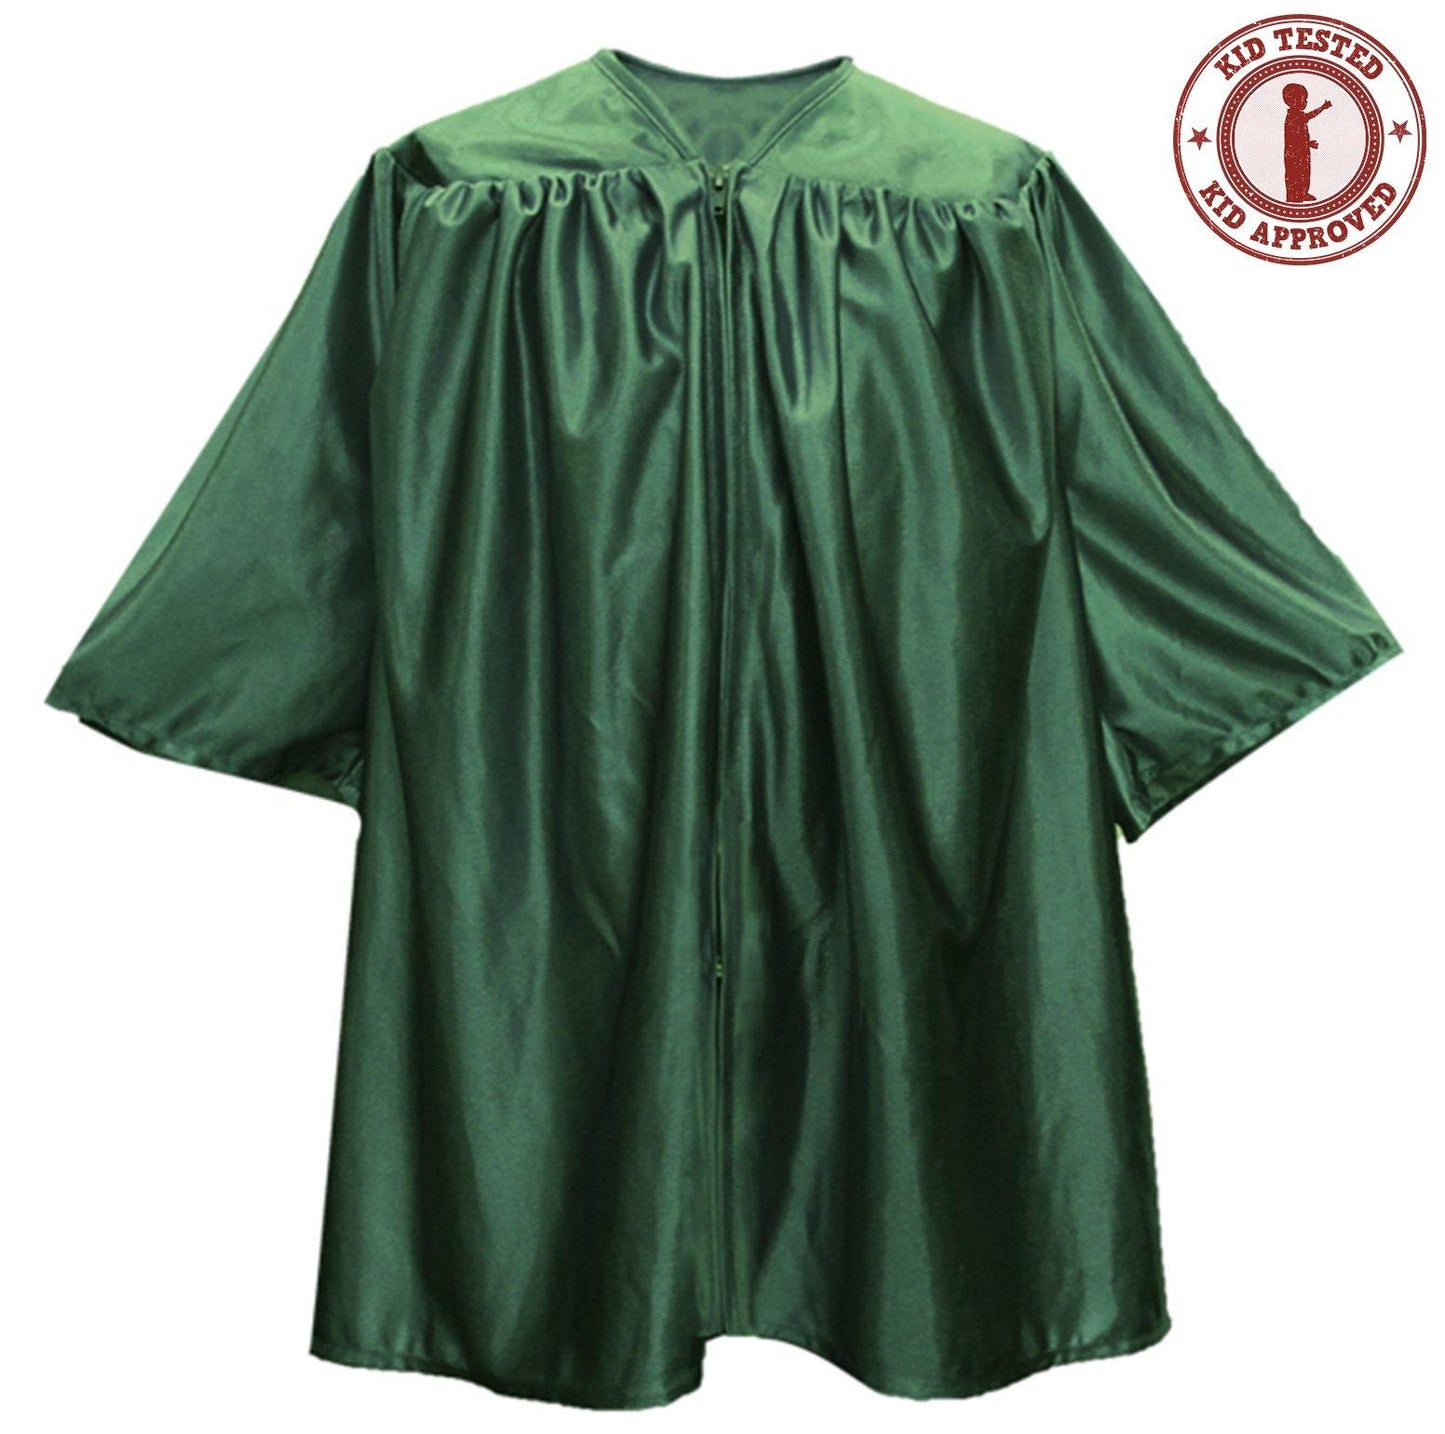 Child Hunter Graduation Gown - Preschool & Kindergarten Gowns - Graduation Attire